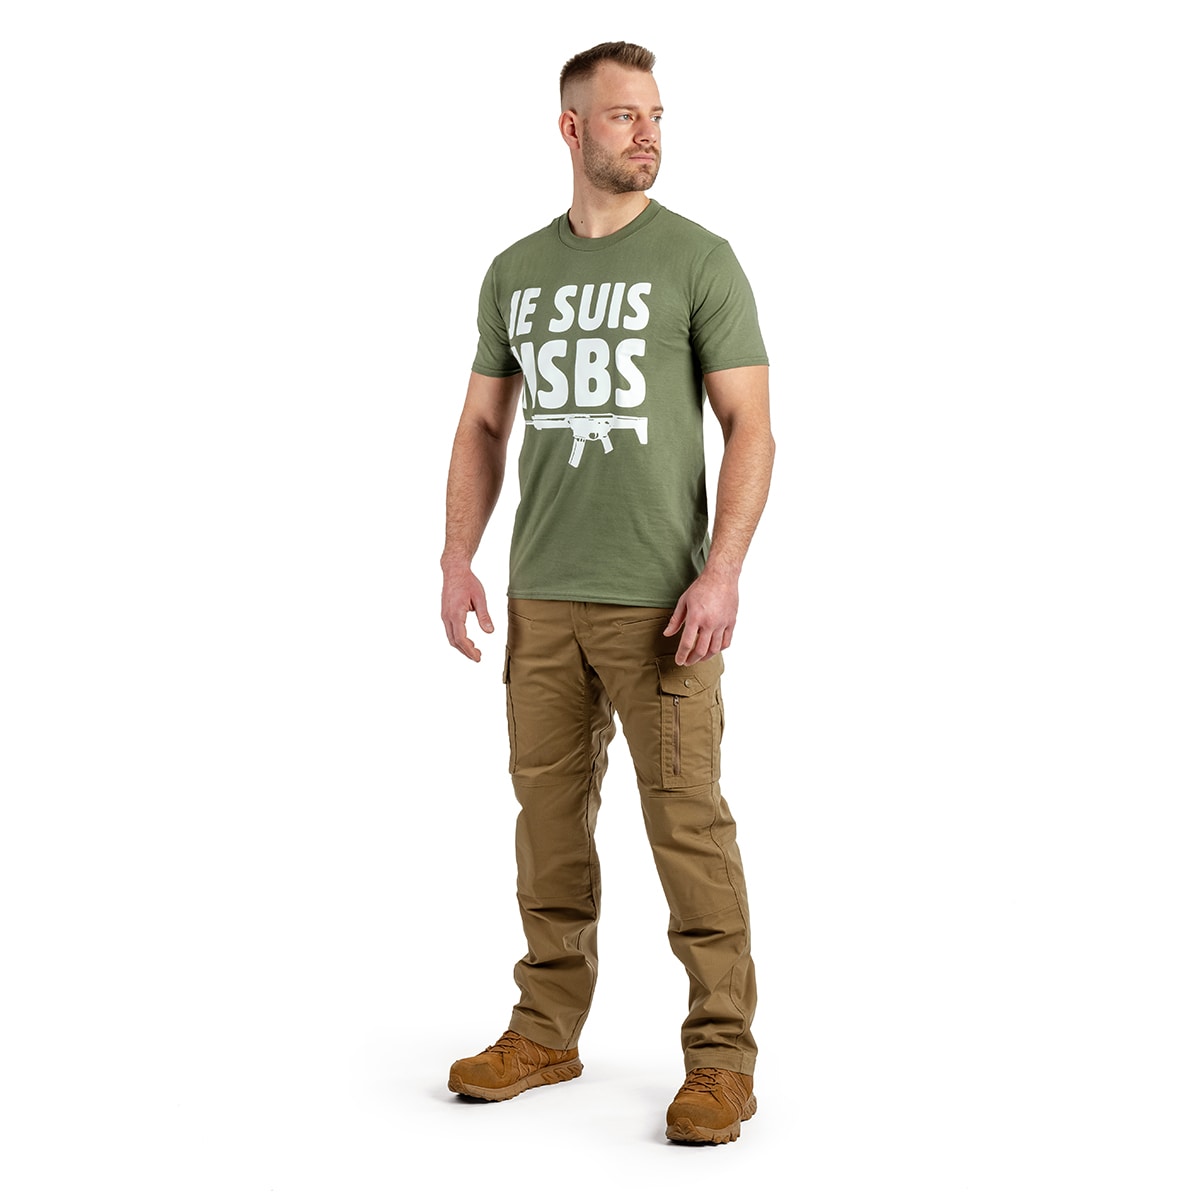 Koszulka T-shirt Kałdun Je Suis MSBS Grot - Zielona